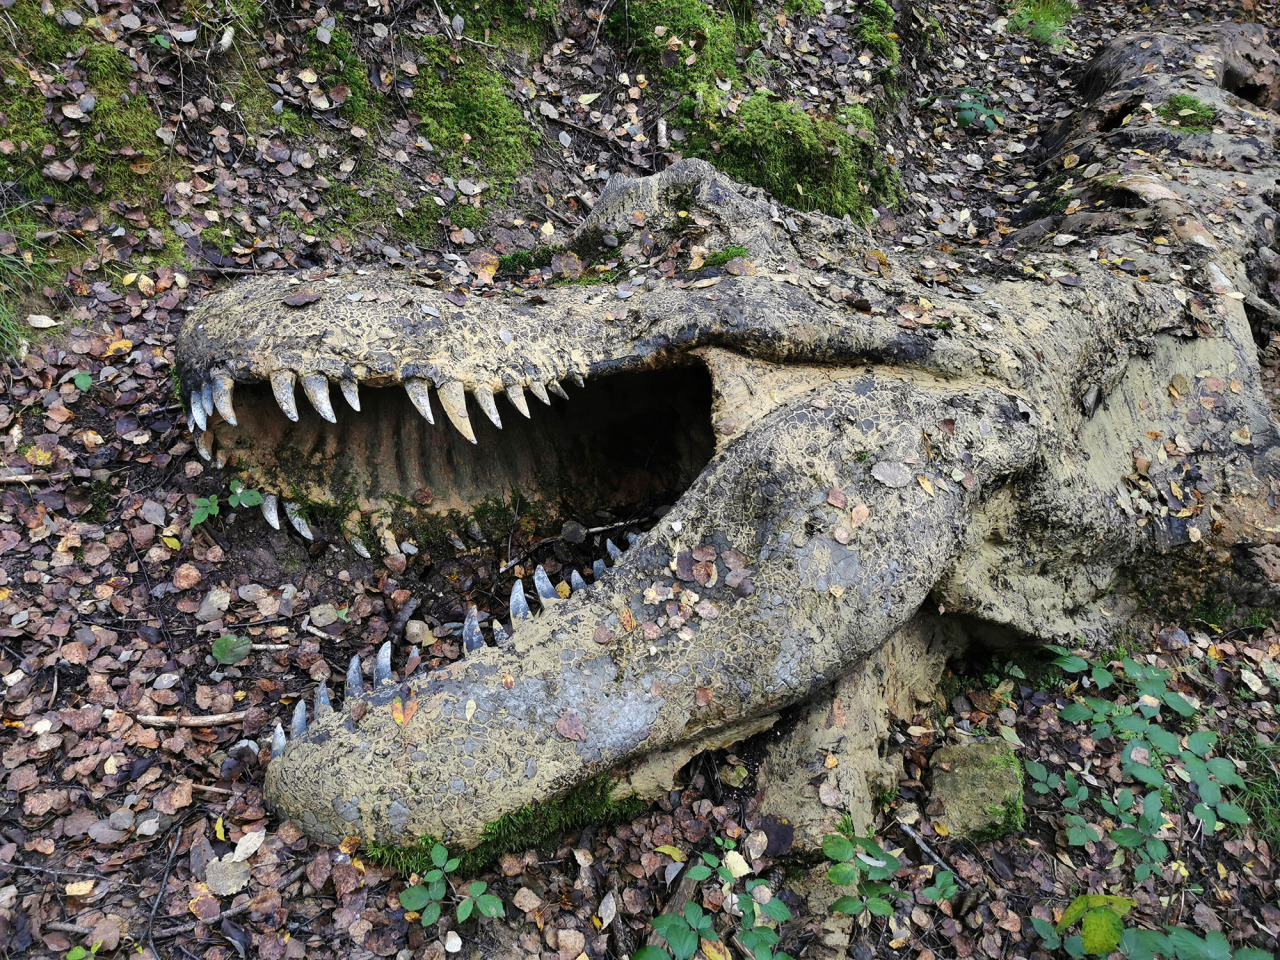 XXX lionfloss:Model of a decomposing Tyrannosaurus photo